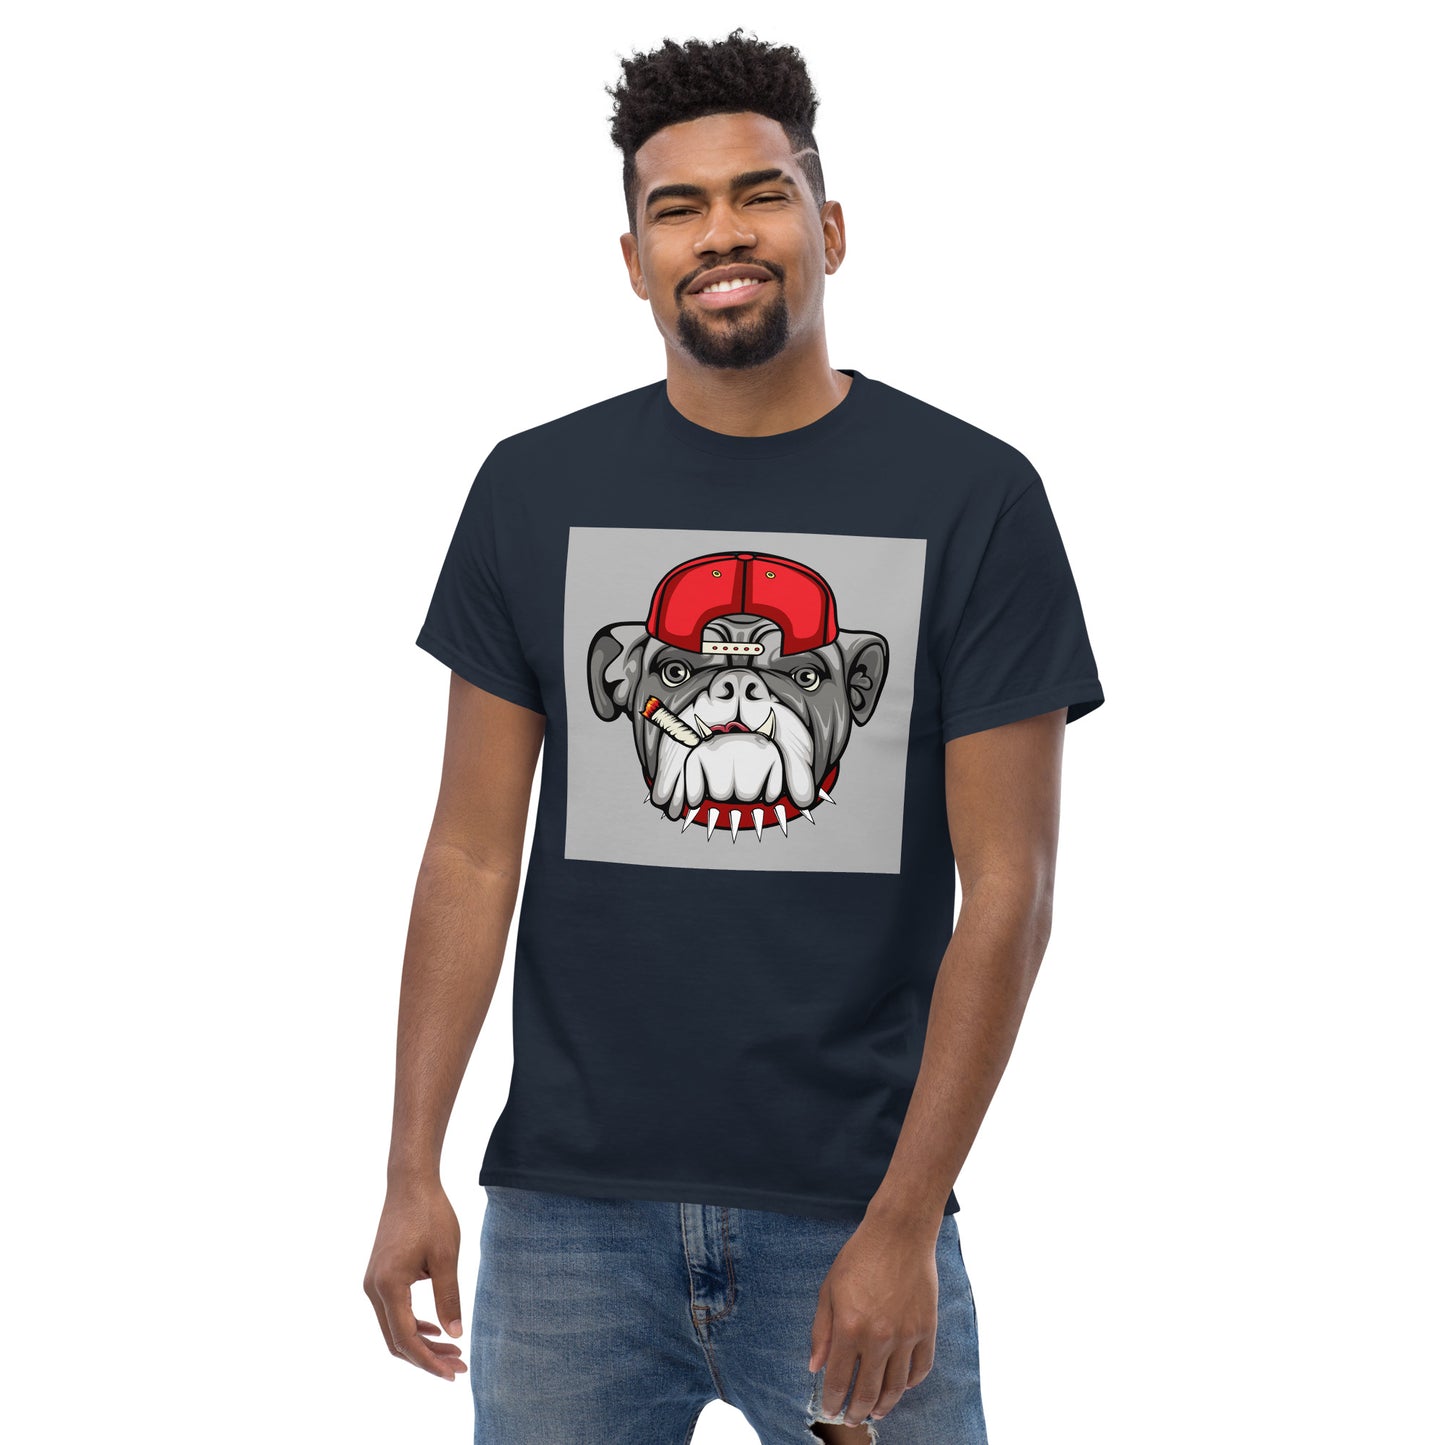 Bulldog T-Shirt - Men's classic tee